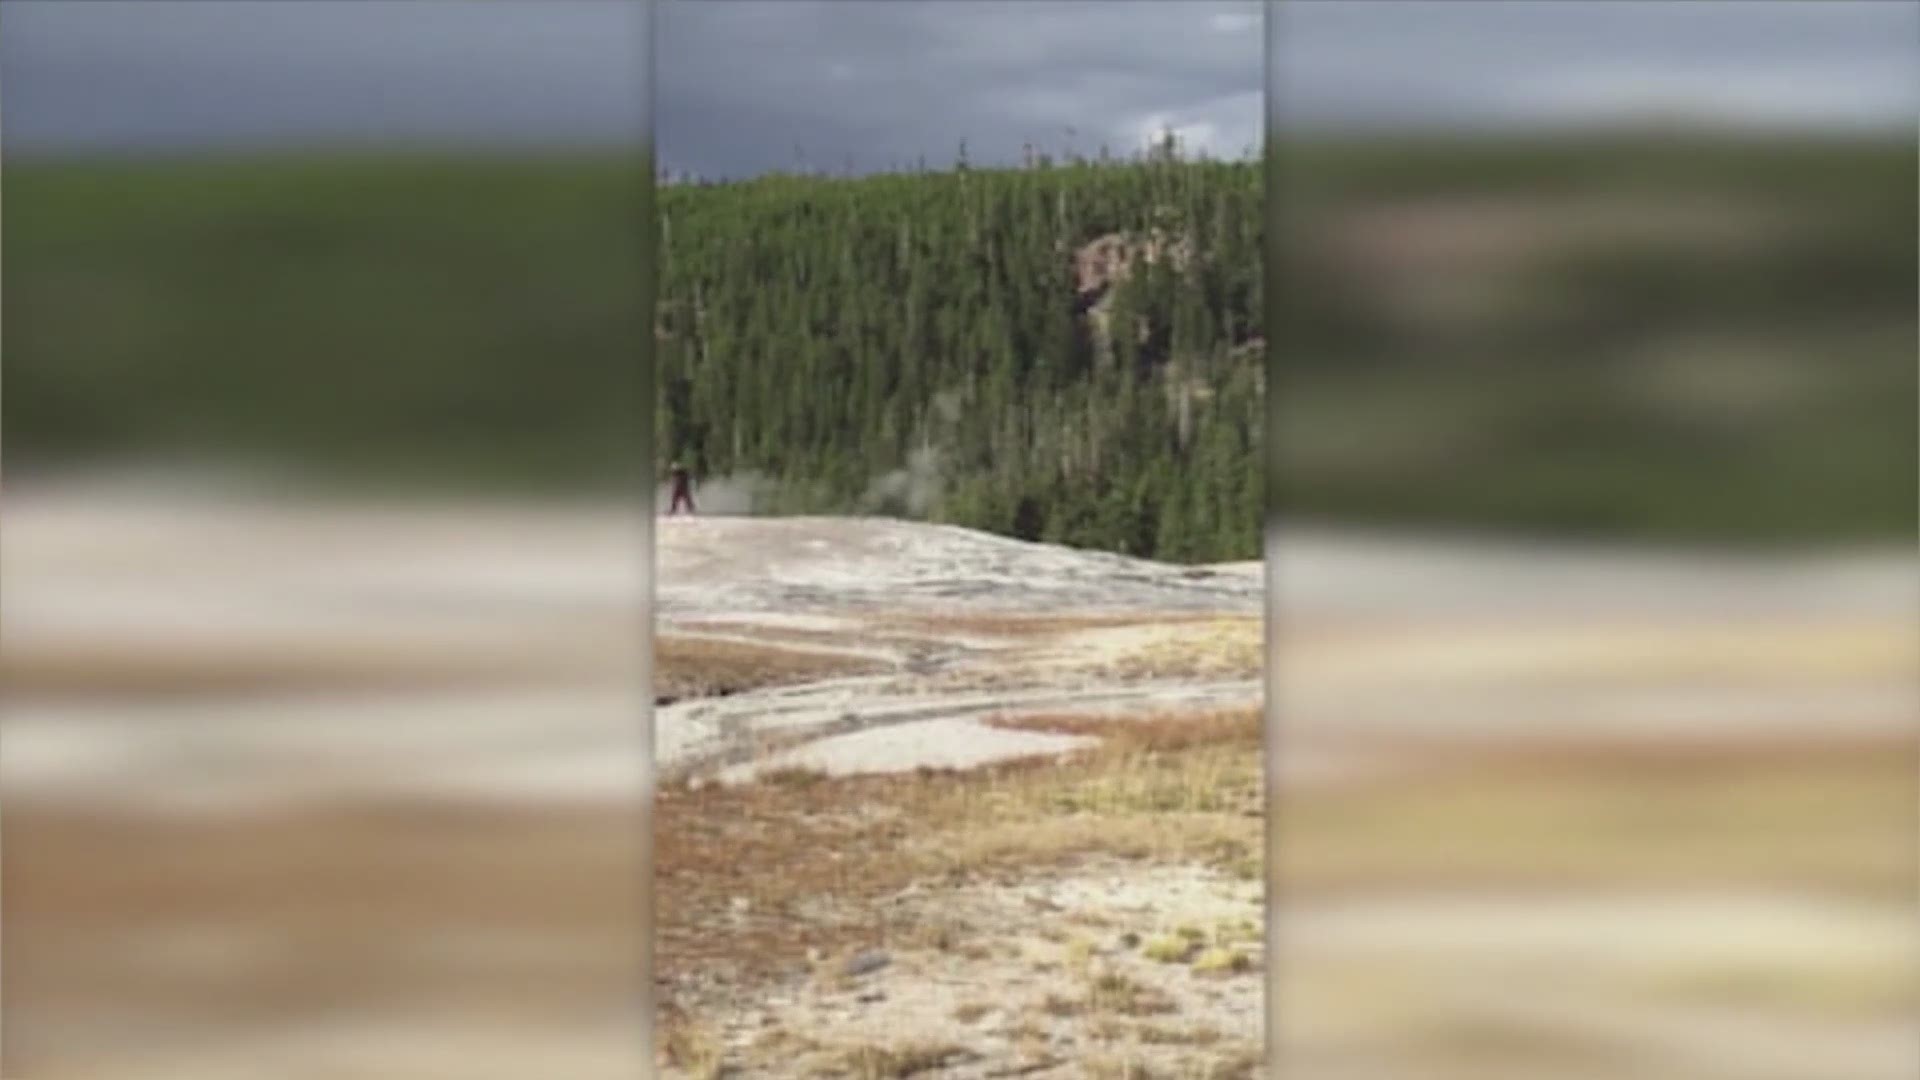 Video shows Old Faithful trespasser before arrest